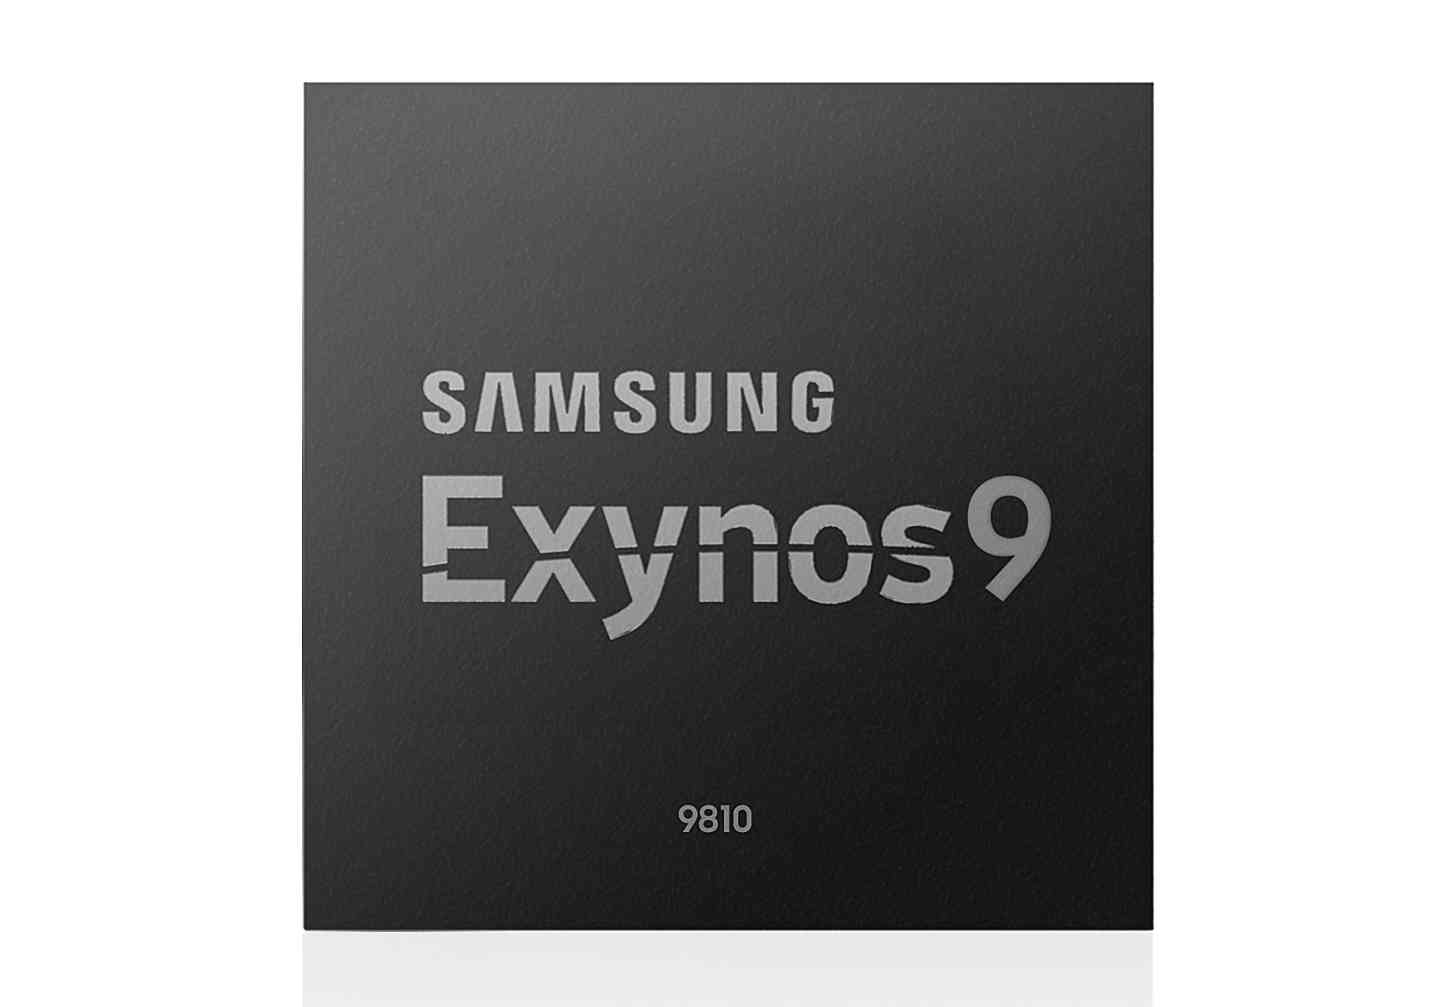 Samsung Exynos 9810 chip photo